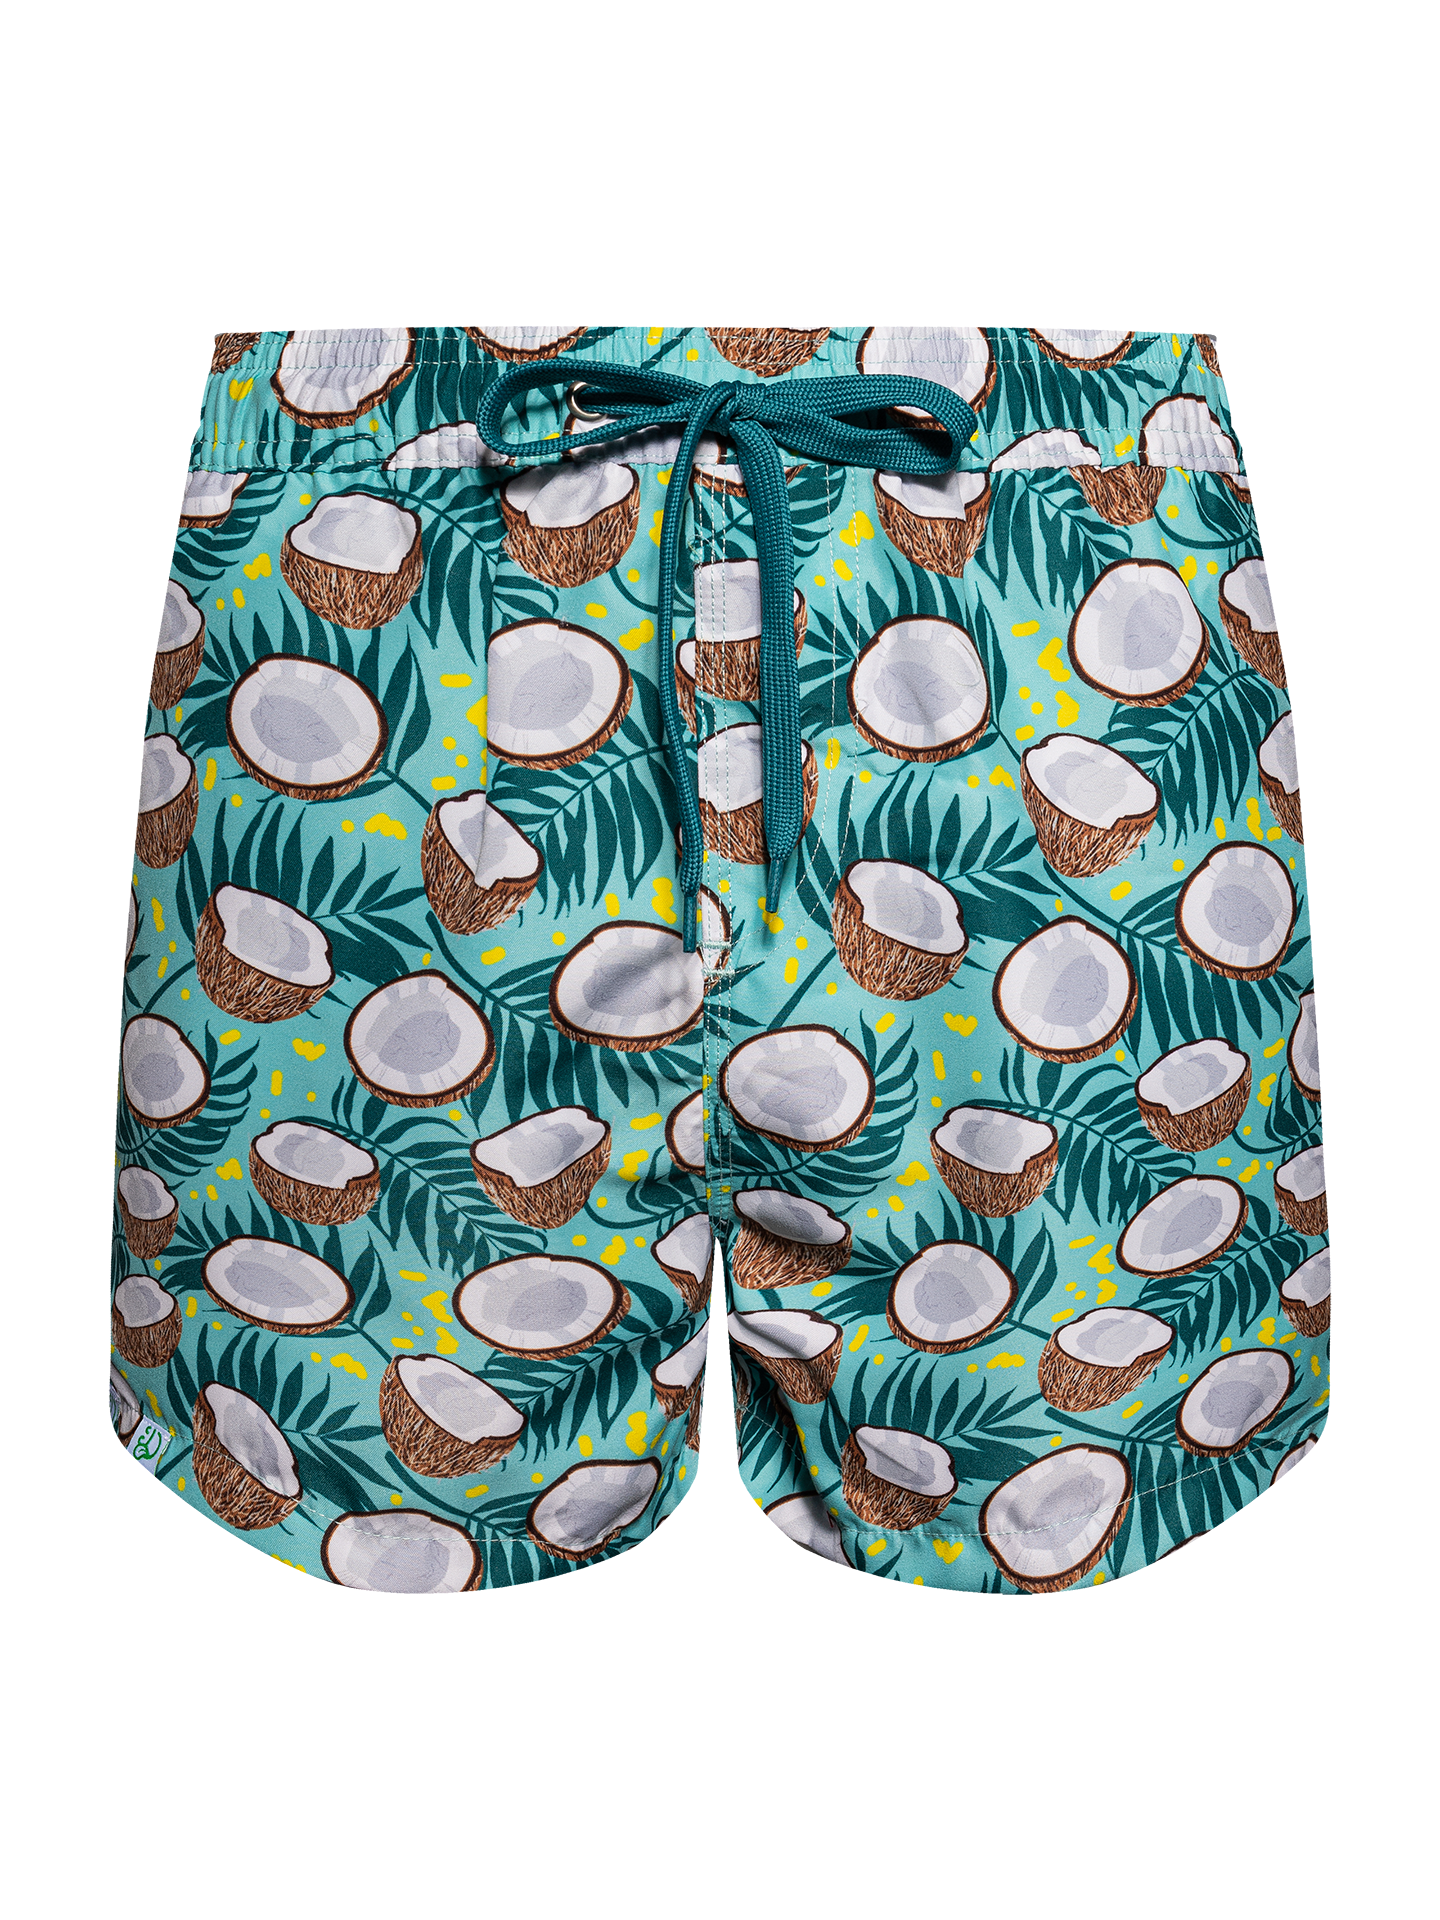 Men's Swim Shorts Coconut